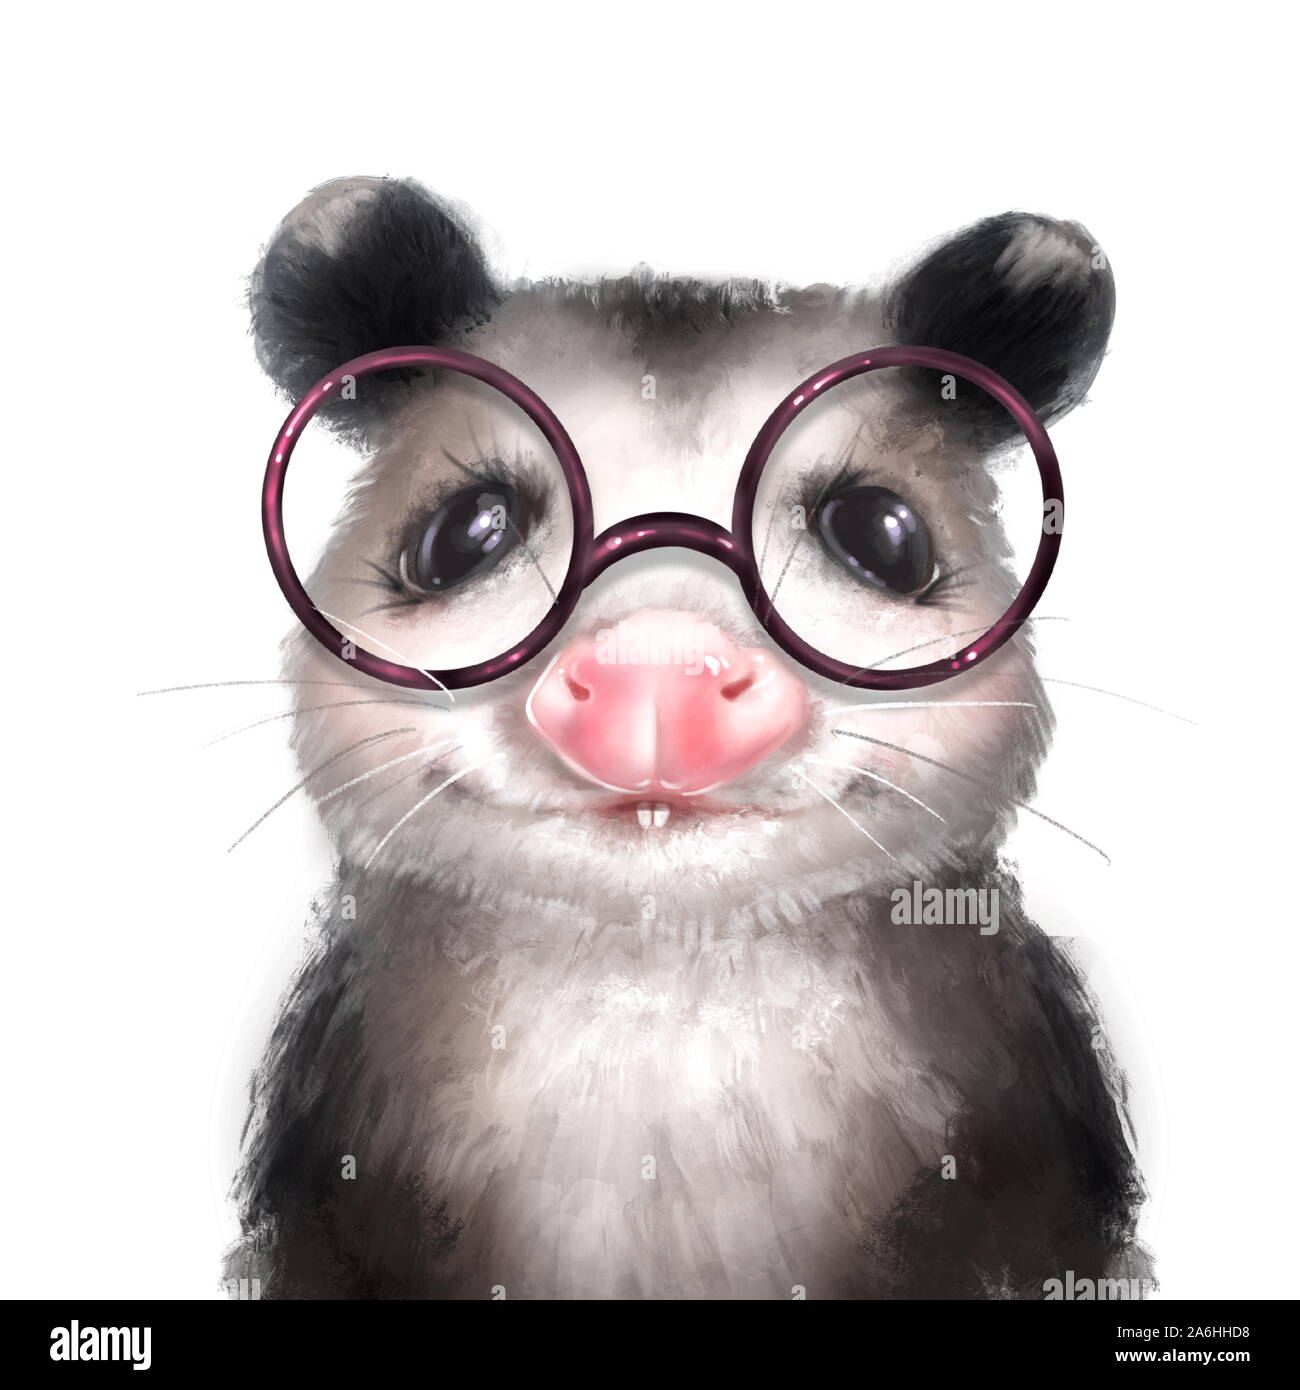 Opossum in glasses, cute illustration Stock Photo